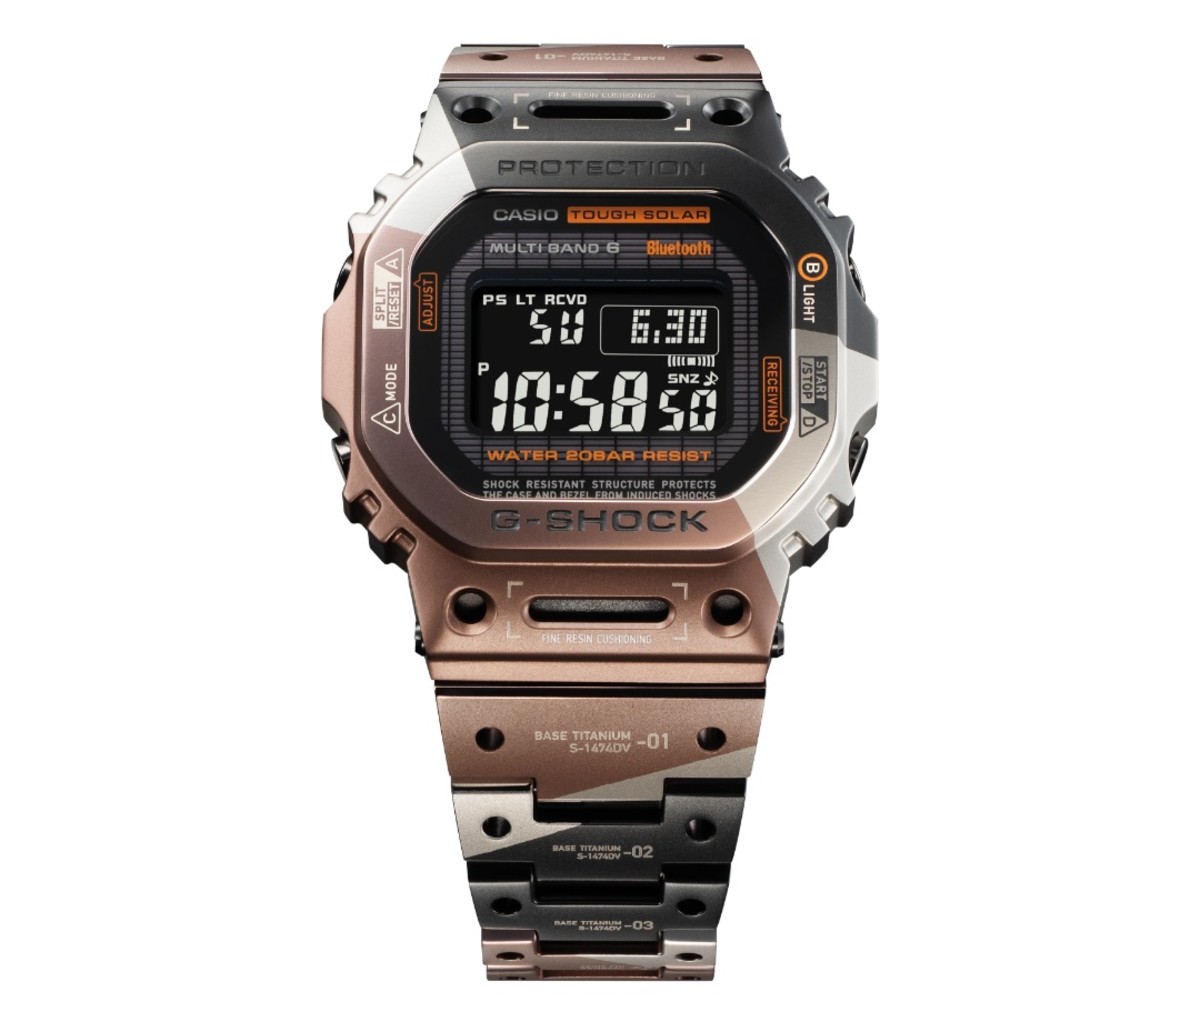 G-Shock GMW-B5000TVB watch on a white background.